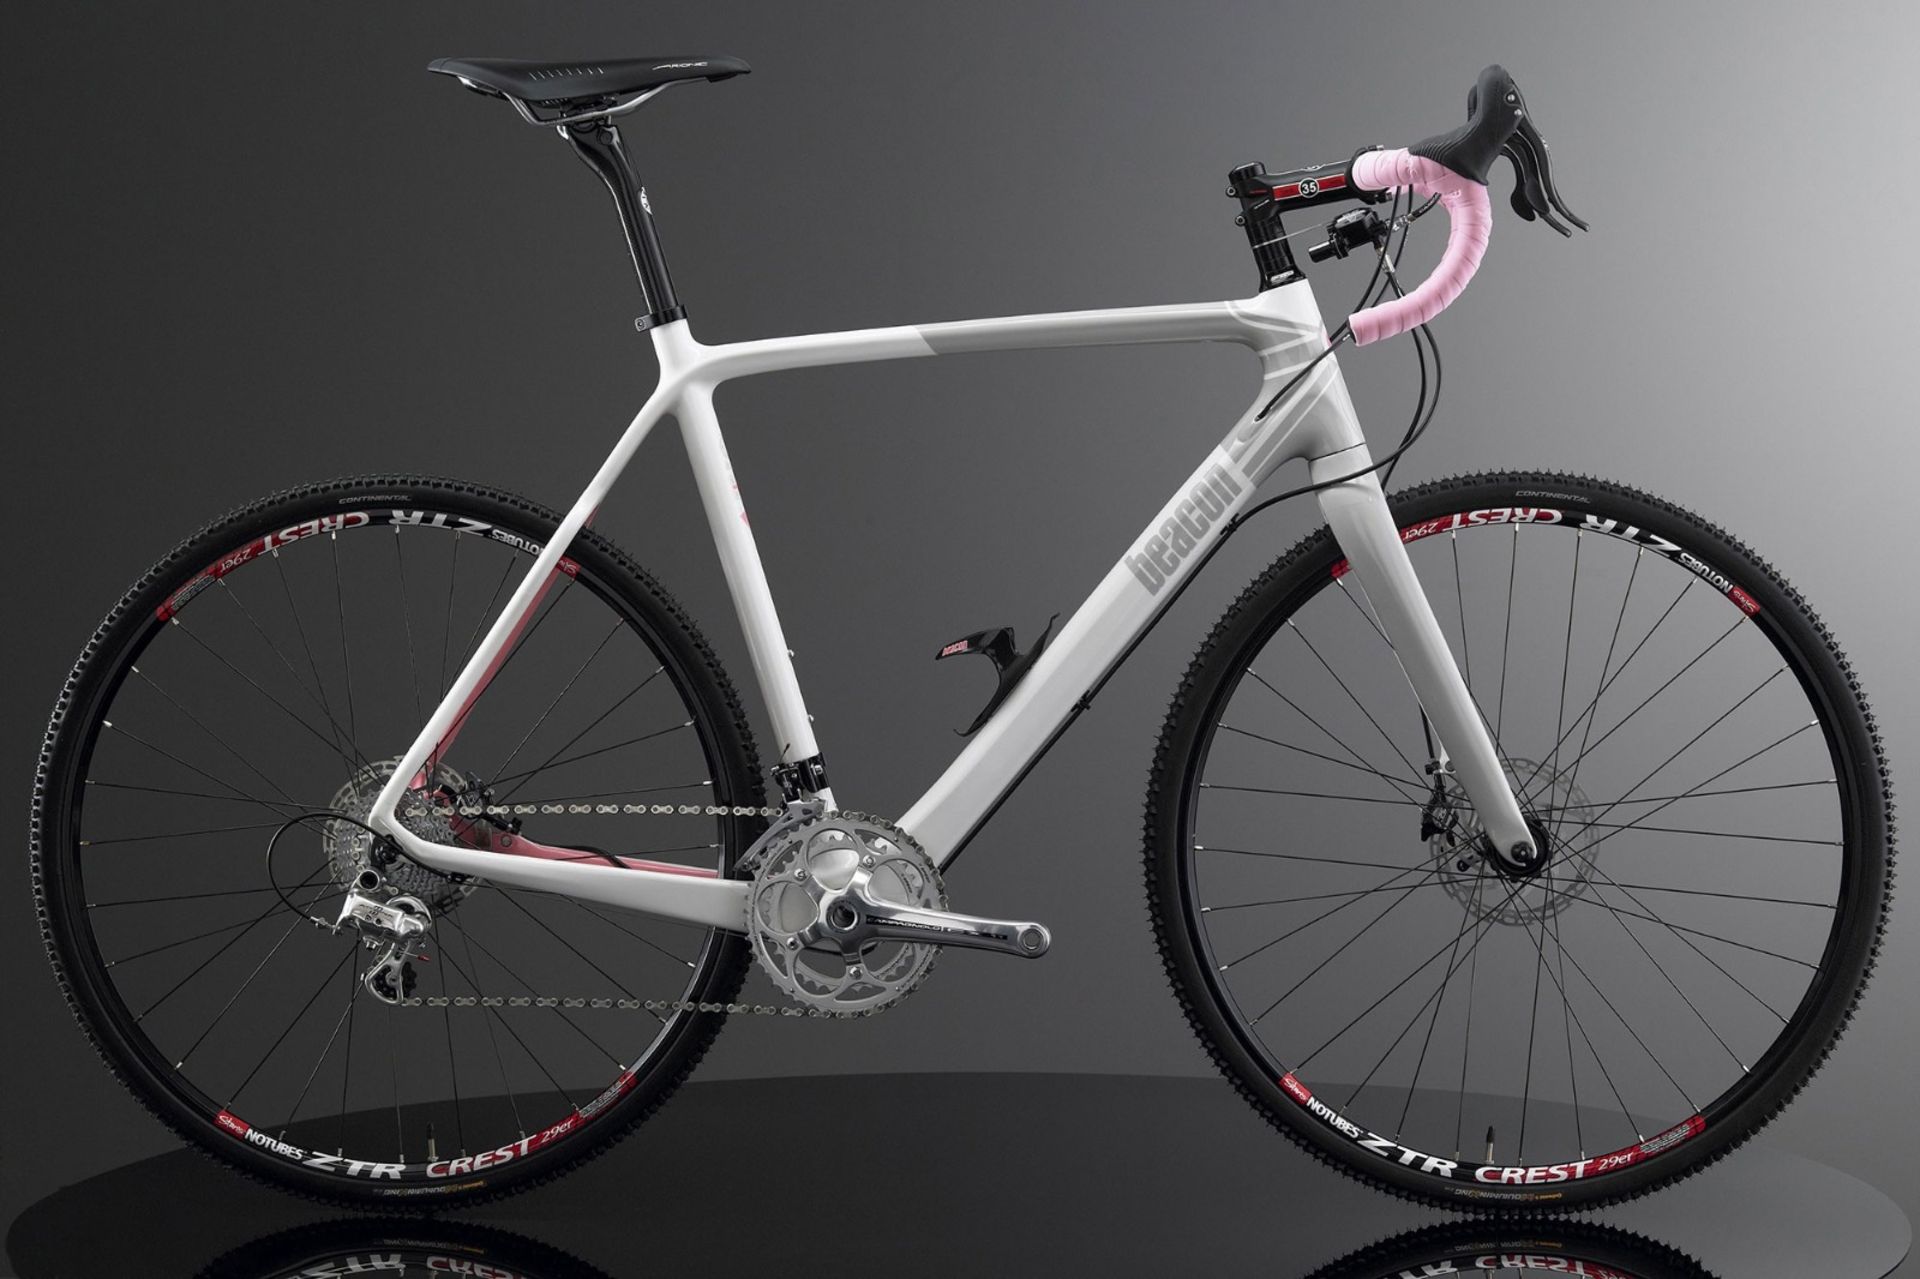 1 x Beacon Model BF-45, Size 580, Carbon Fibre Bike Frame in White & Grey. - Image 2 of 3